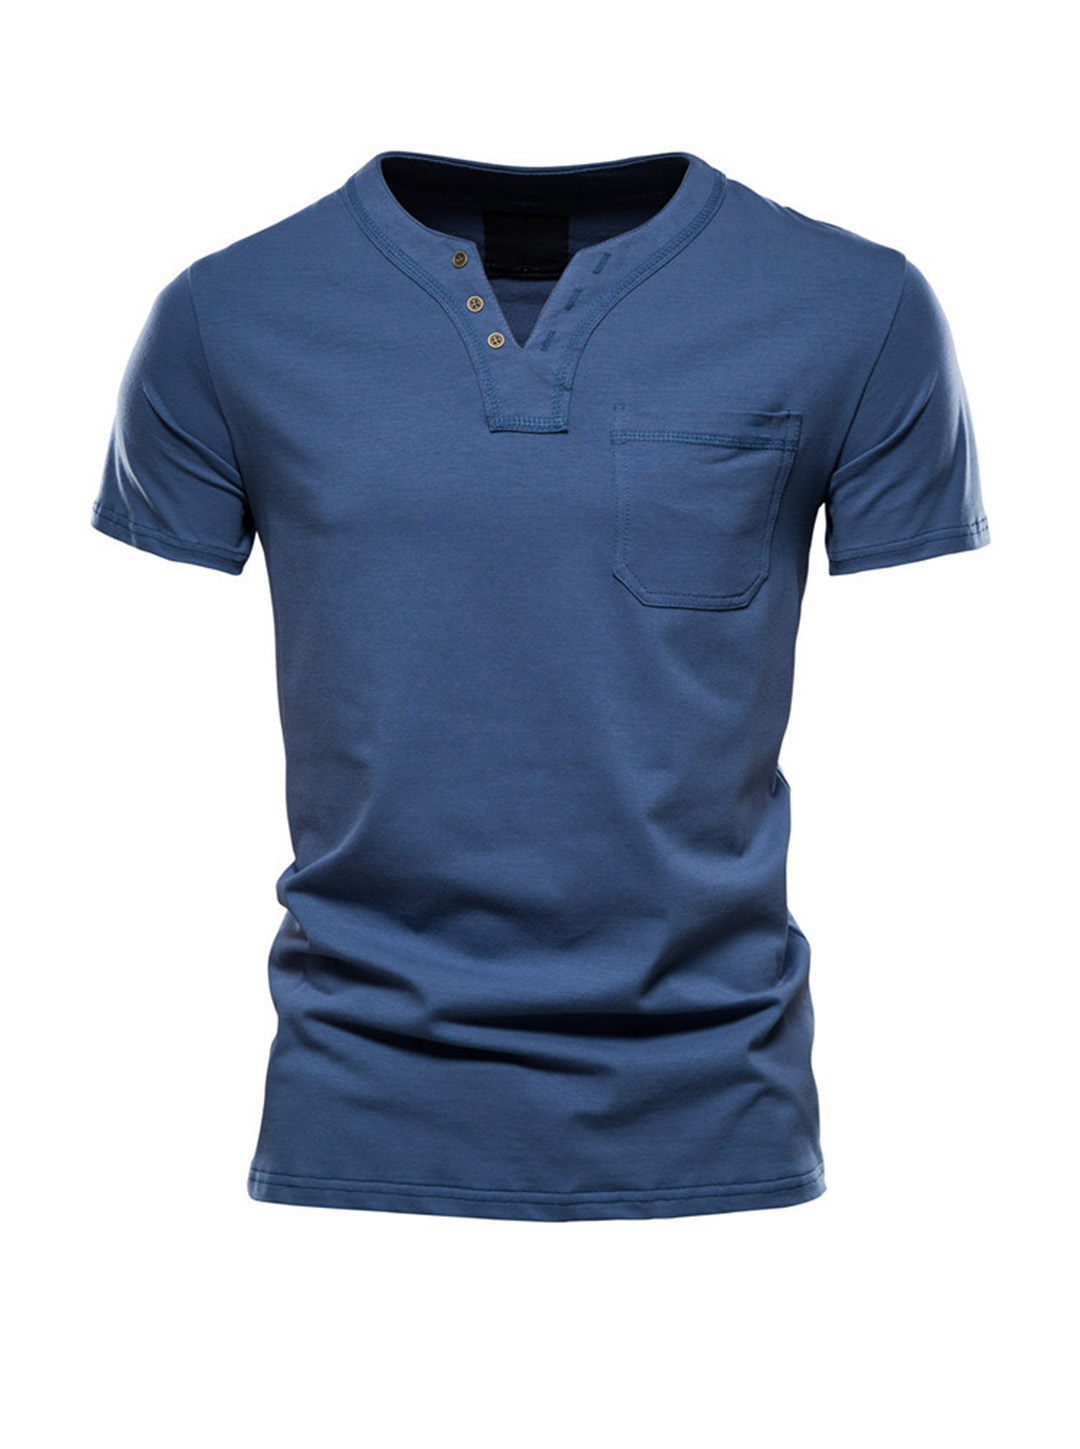 Men's Simple V-Neck Casual T-shirt-poisonstreetwear.com